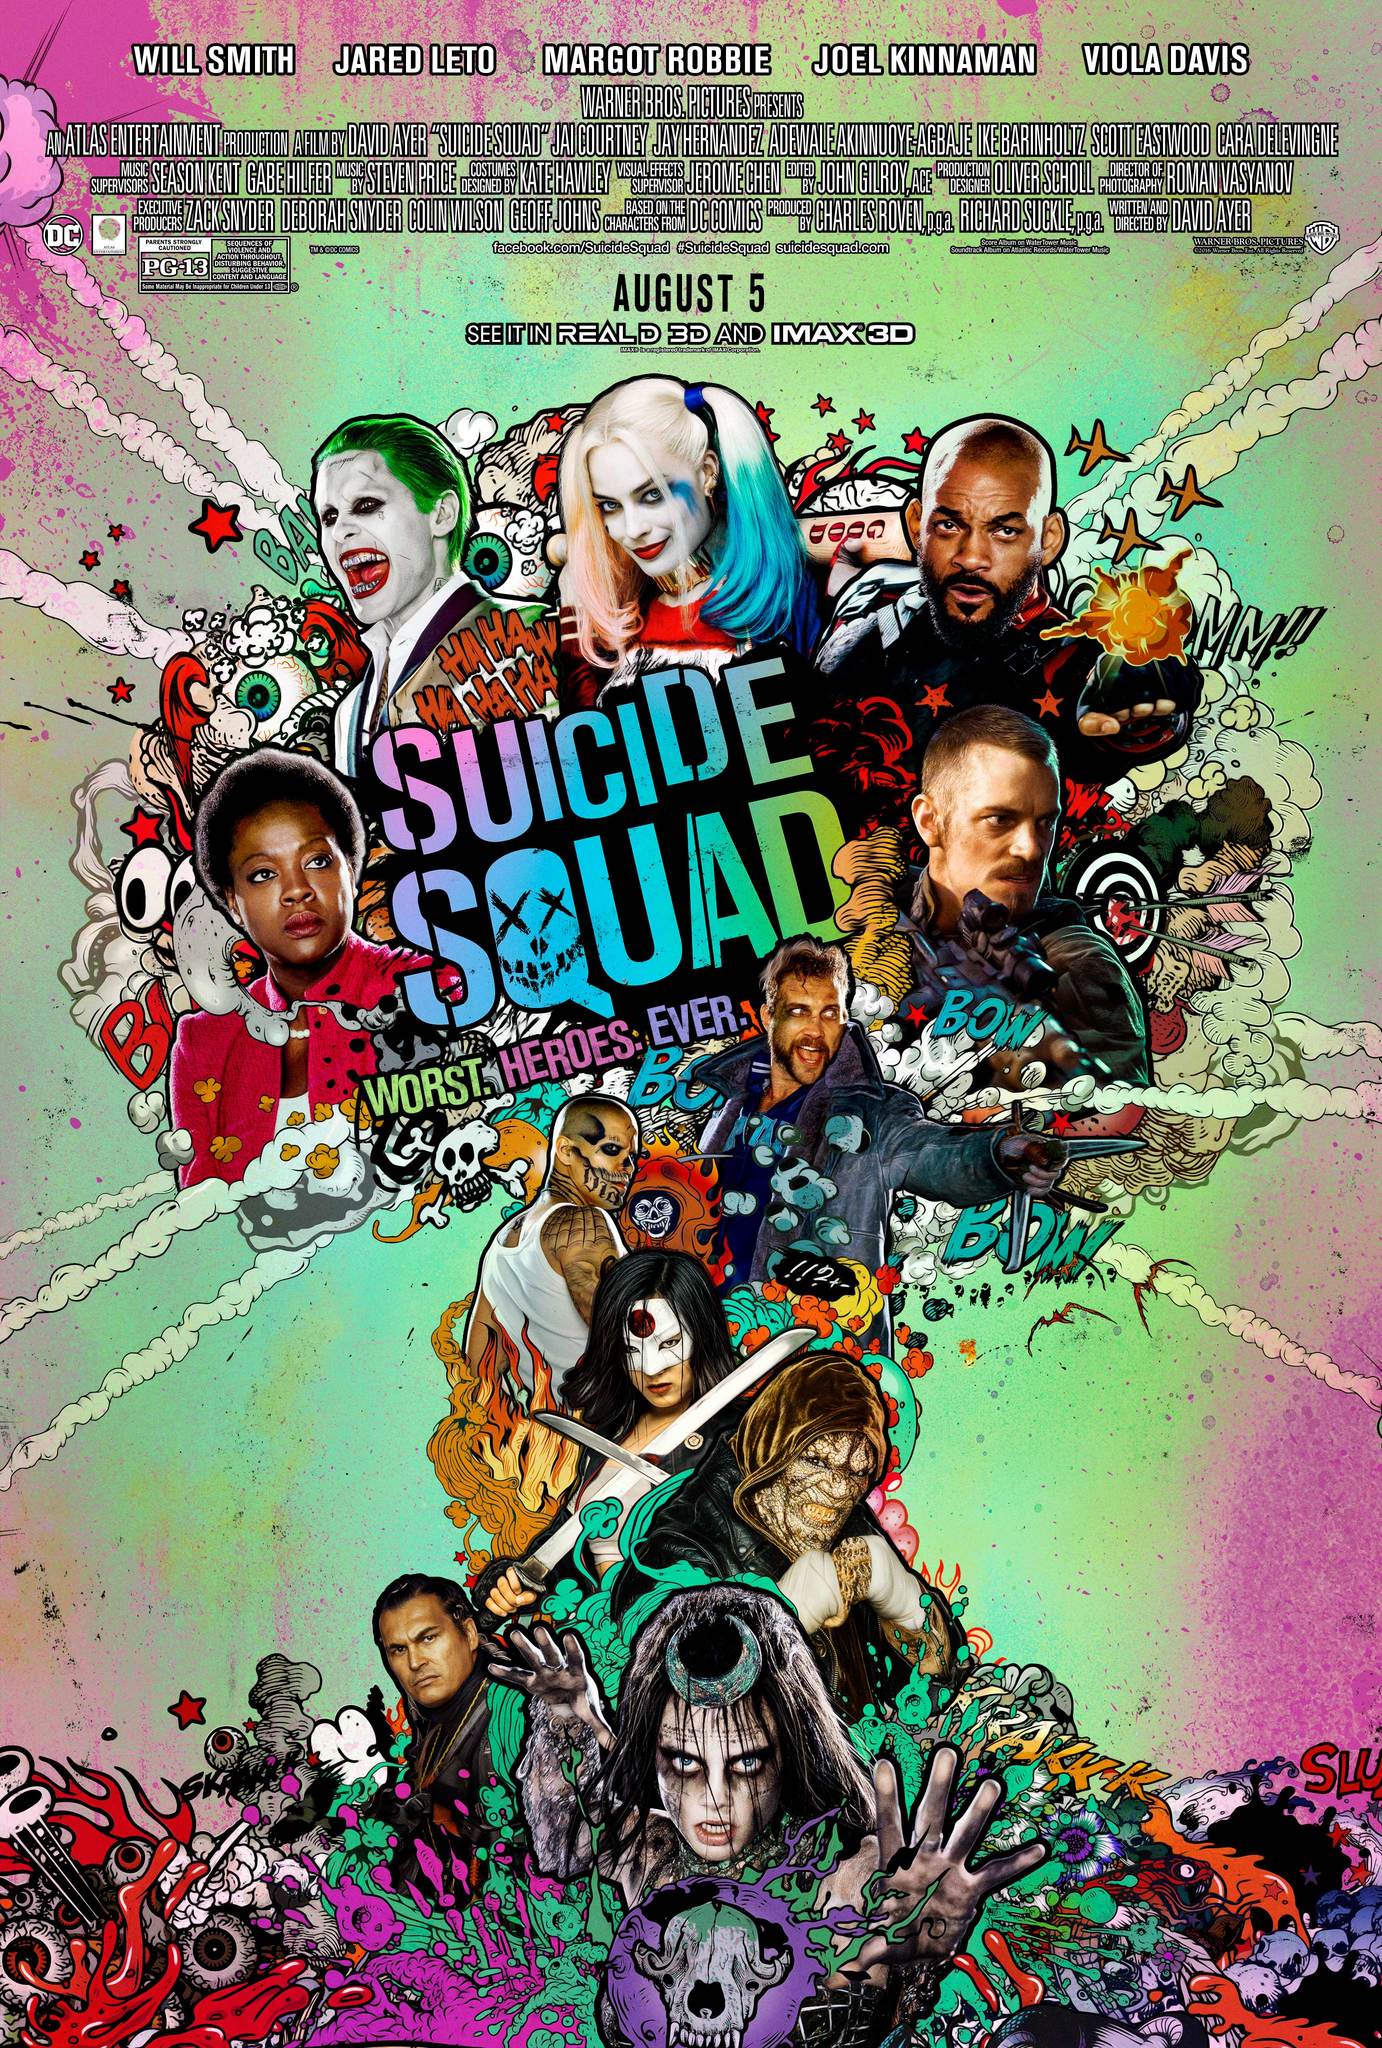 Suicide Squad (2016) ทีมพลีชีพมหาวายร้าย Will Smith